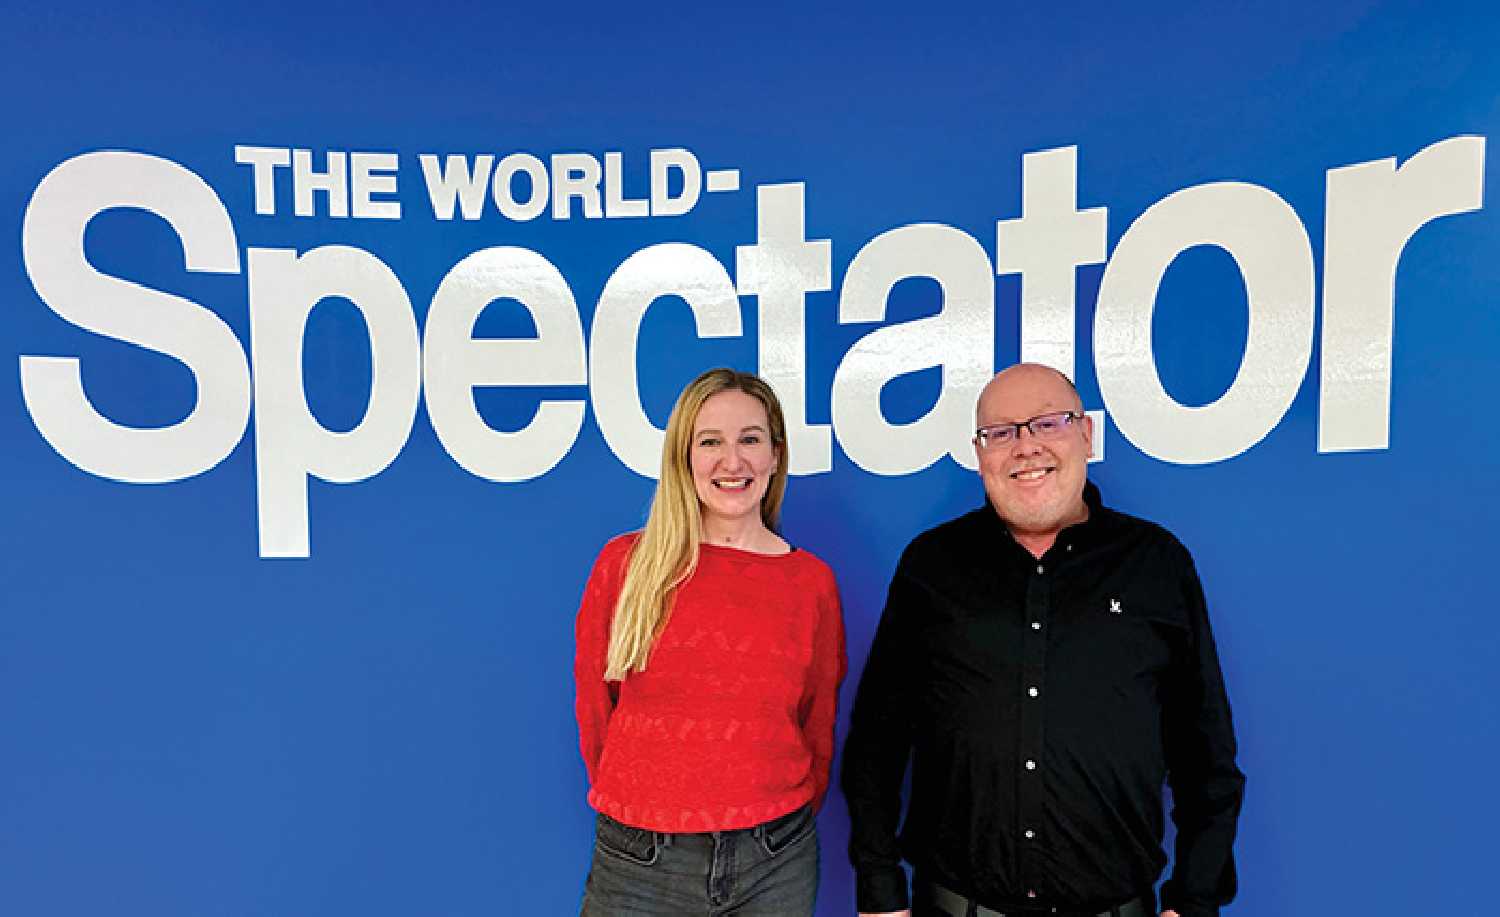 Tanya Birkbeck and World-Spectator editor Kevin Weedmark at the World-Spectator office last week.